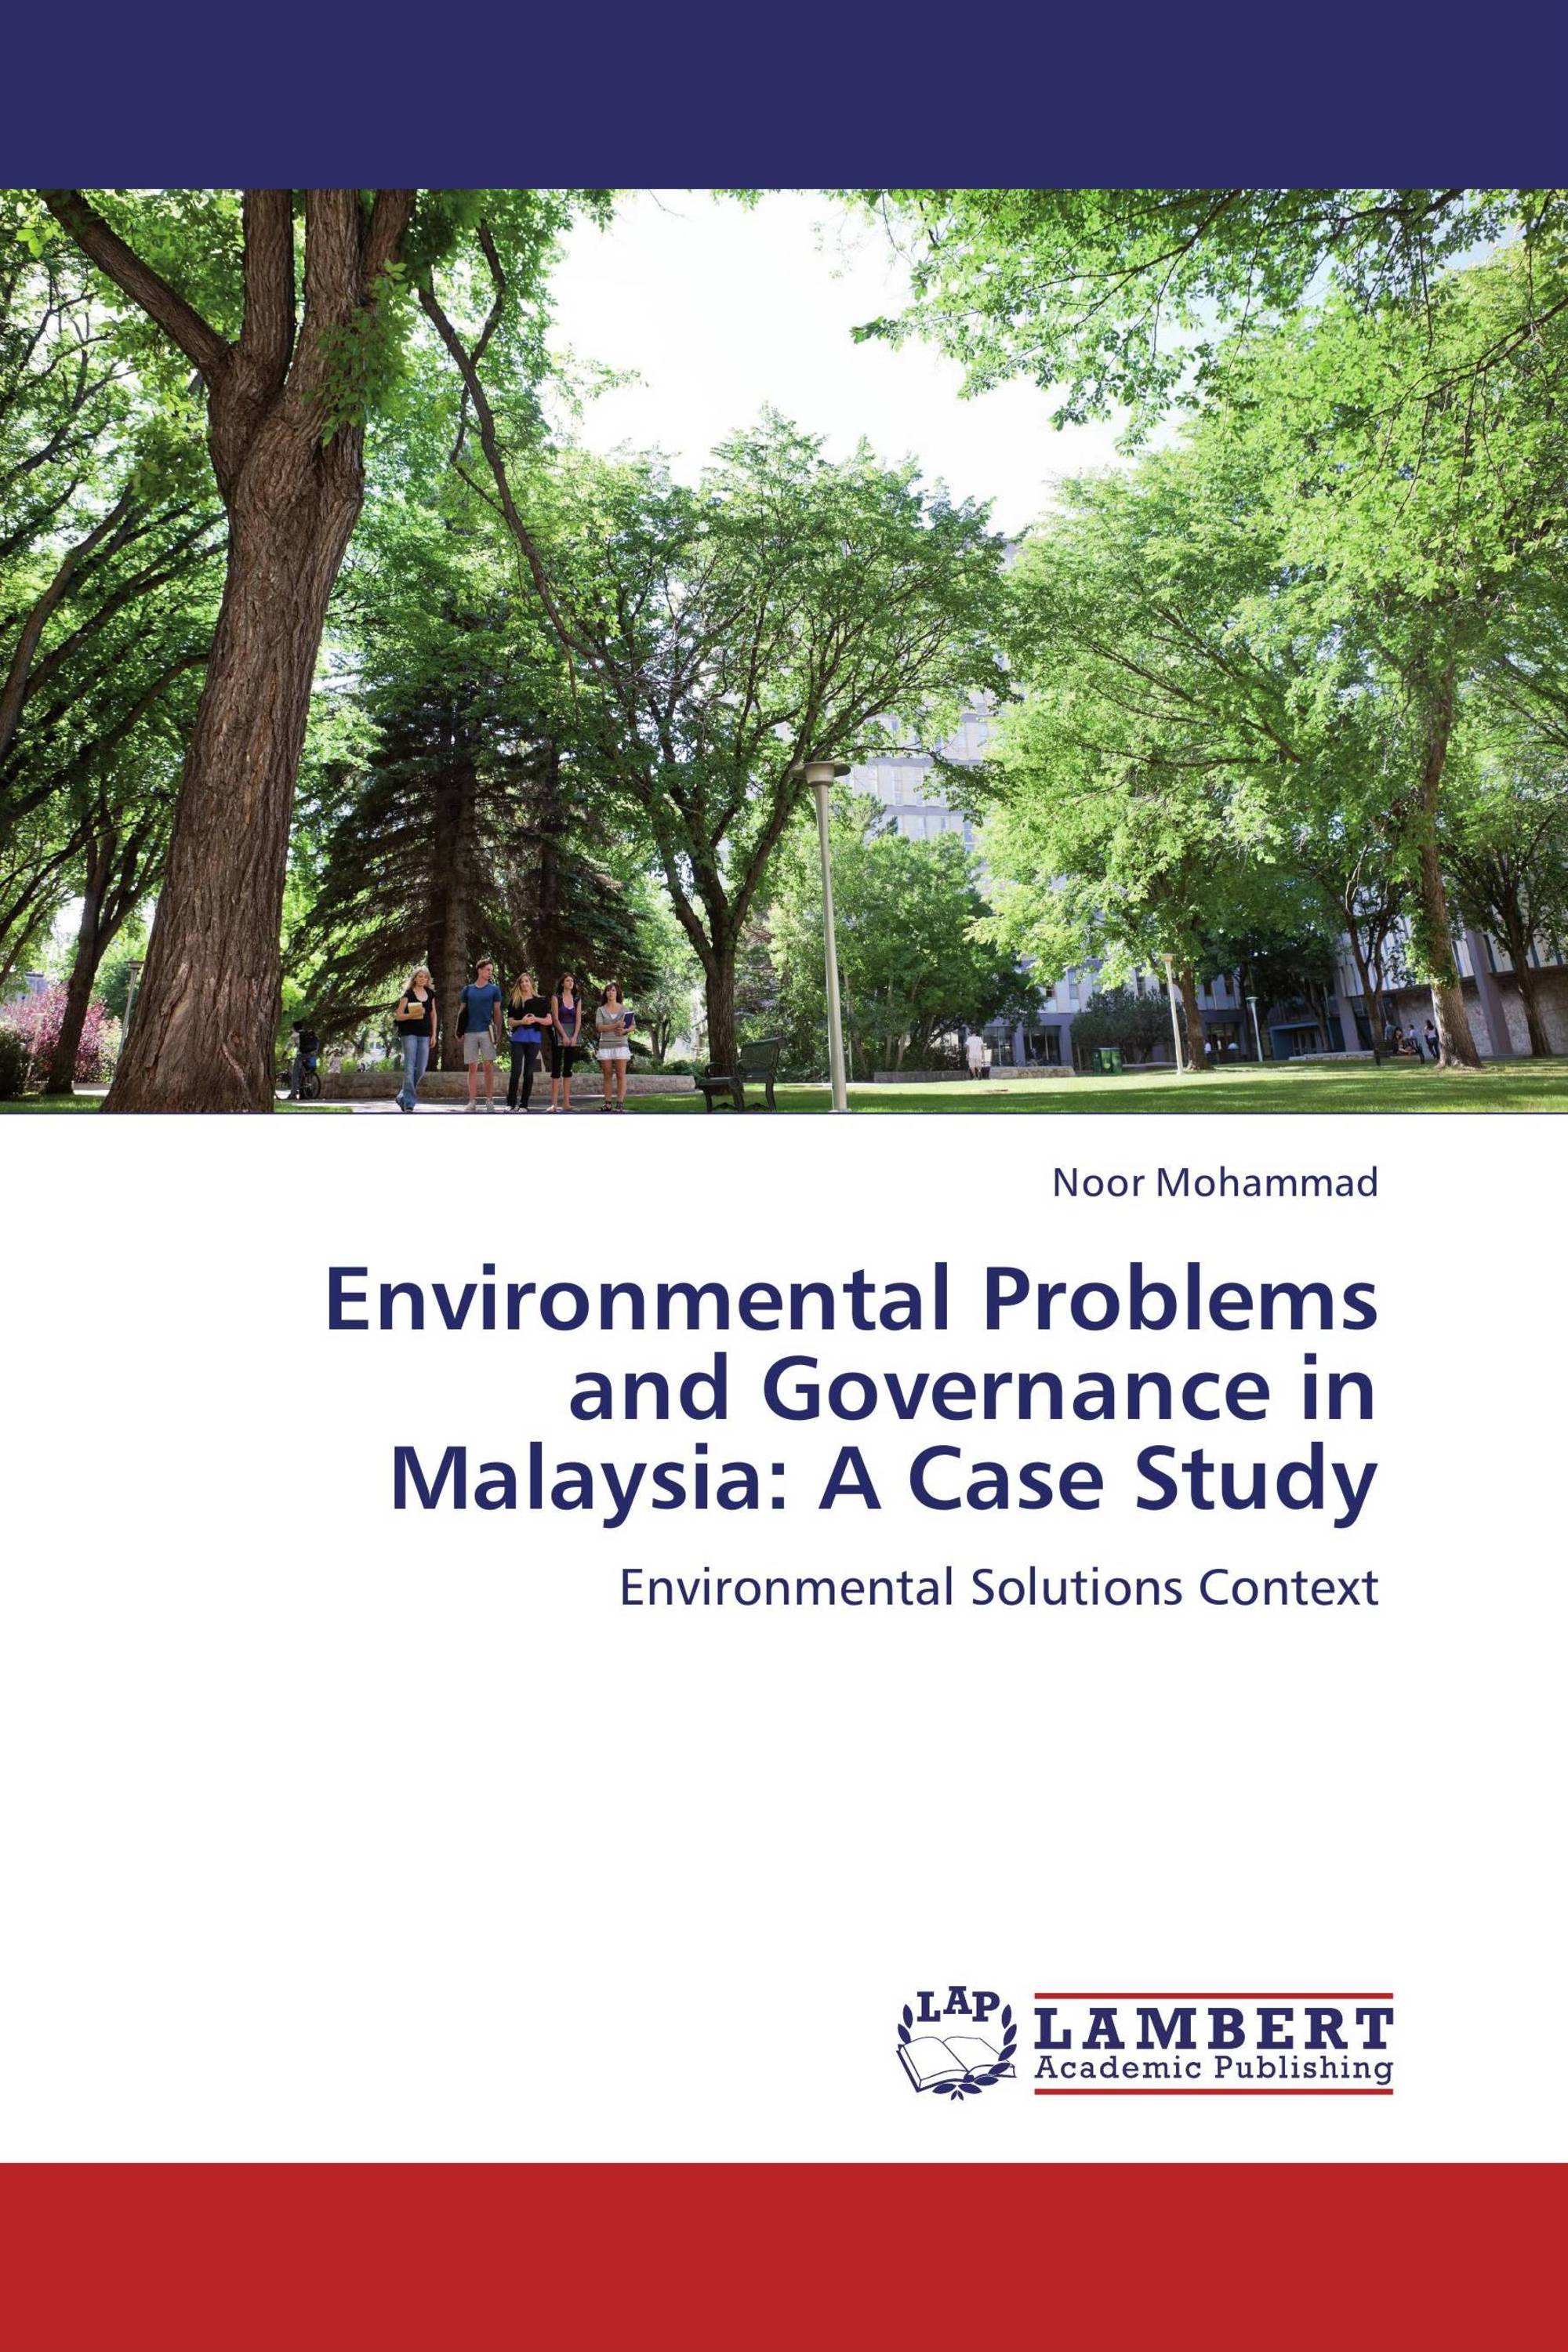 case study in environmental governance